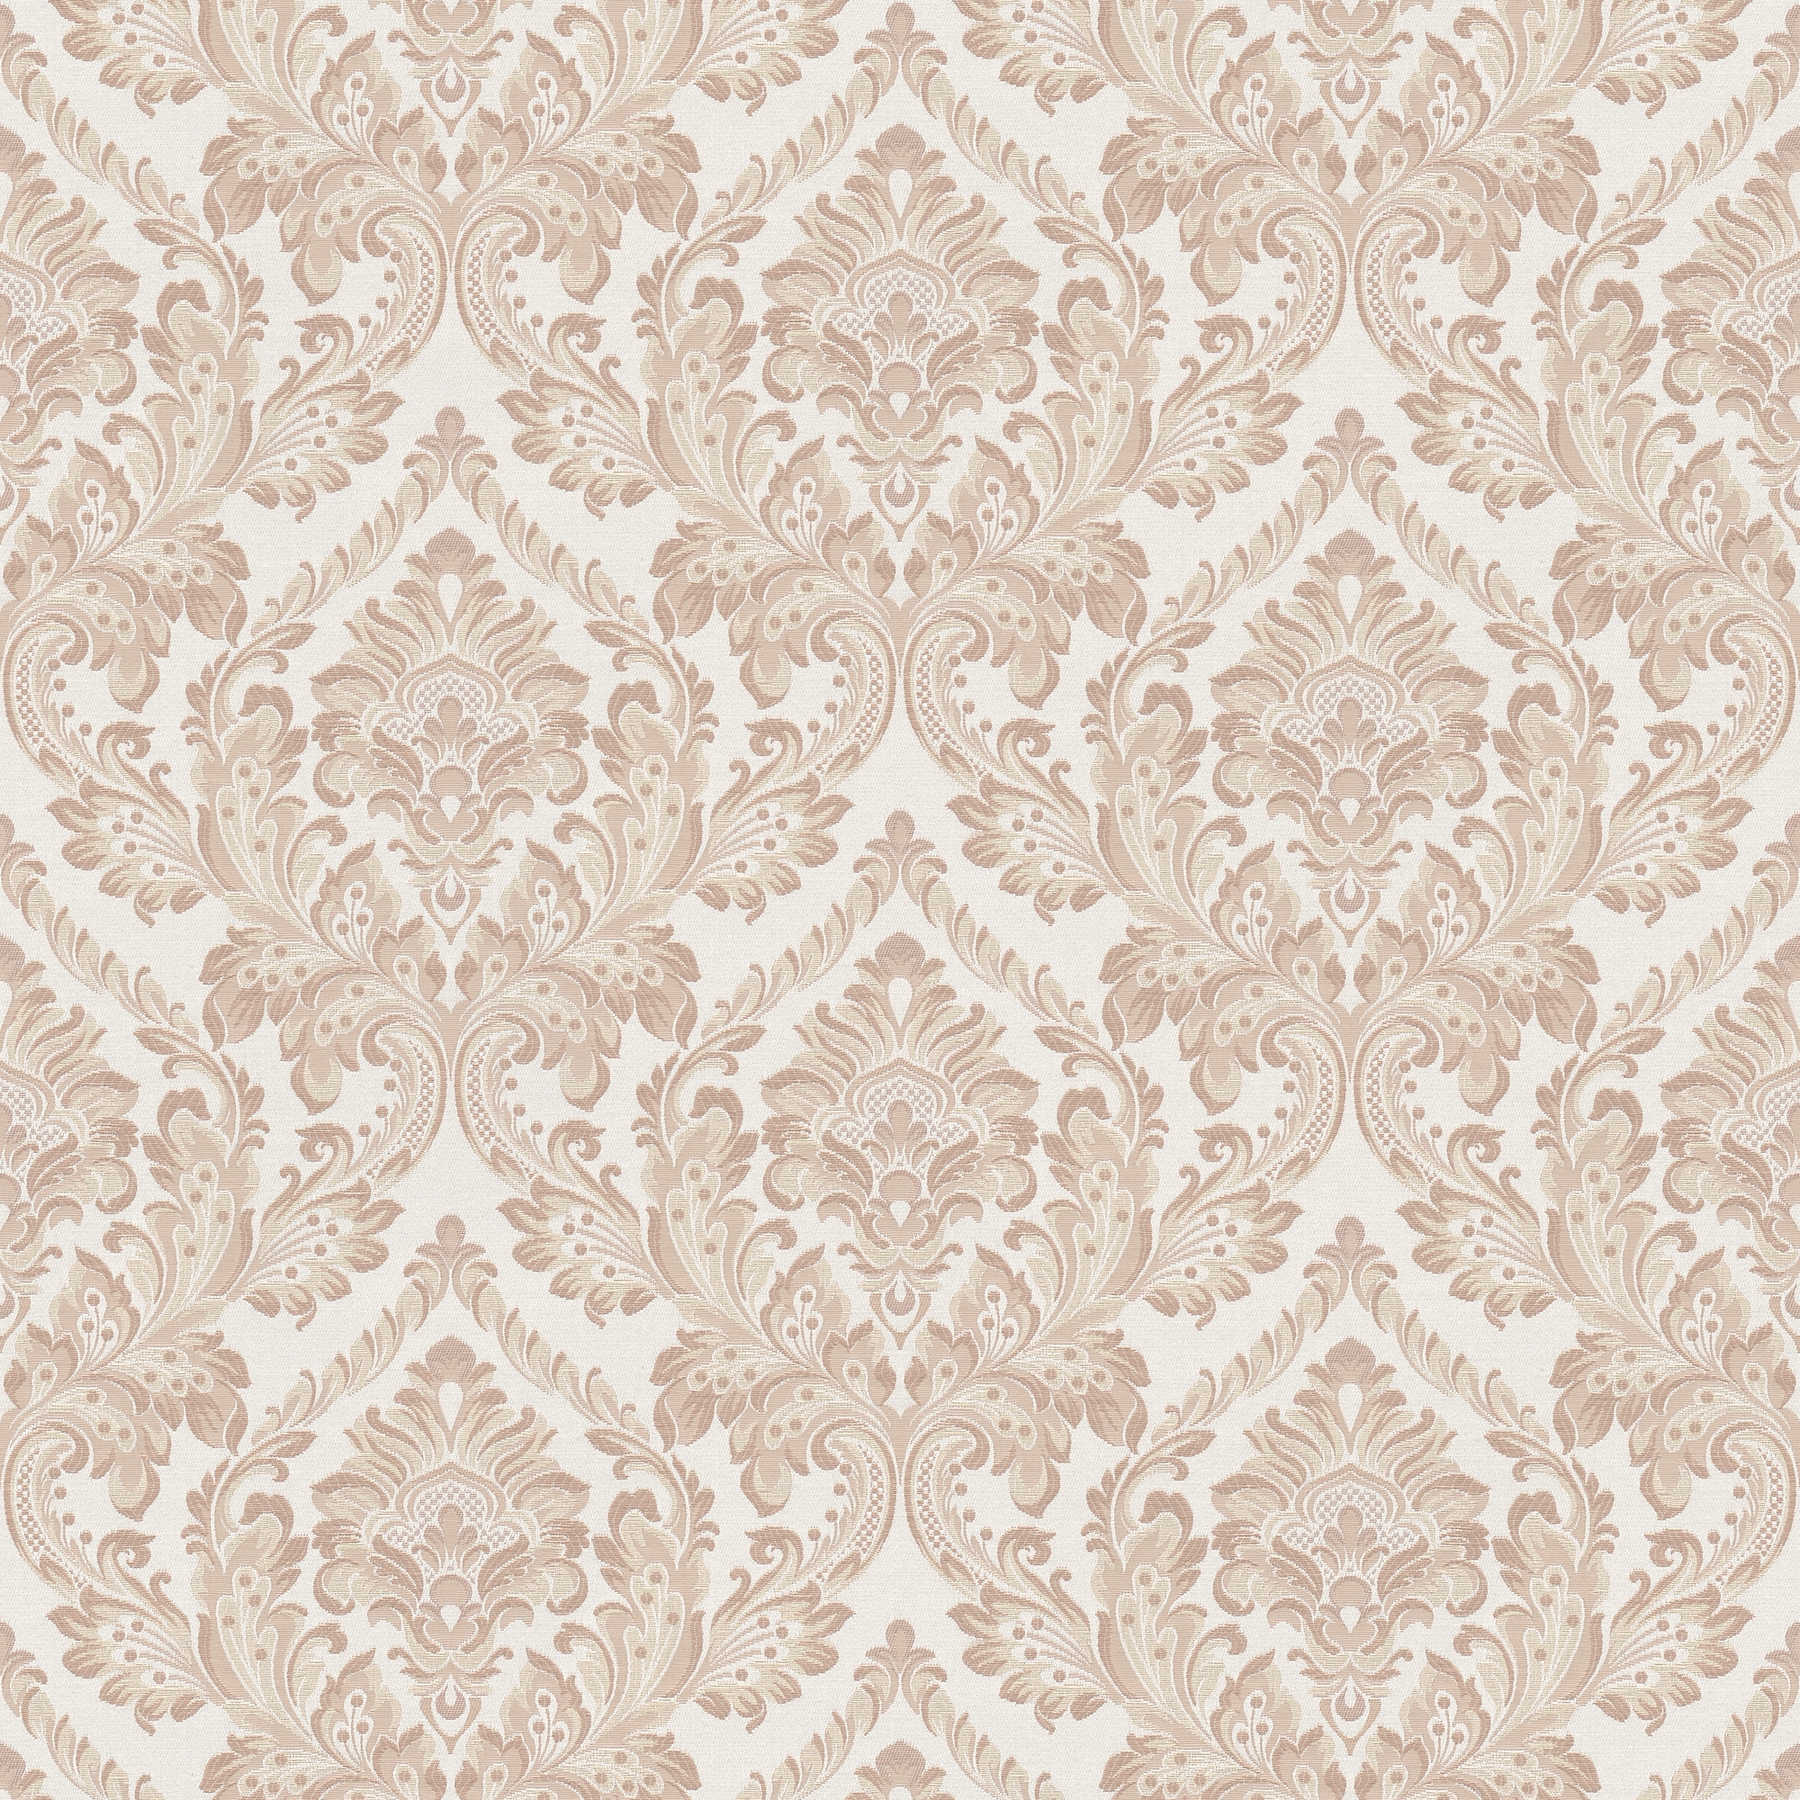 Jacquard ornament pattern wallpaper - brown, beige
